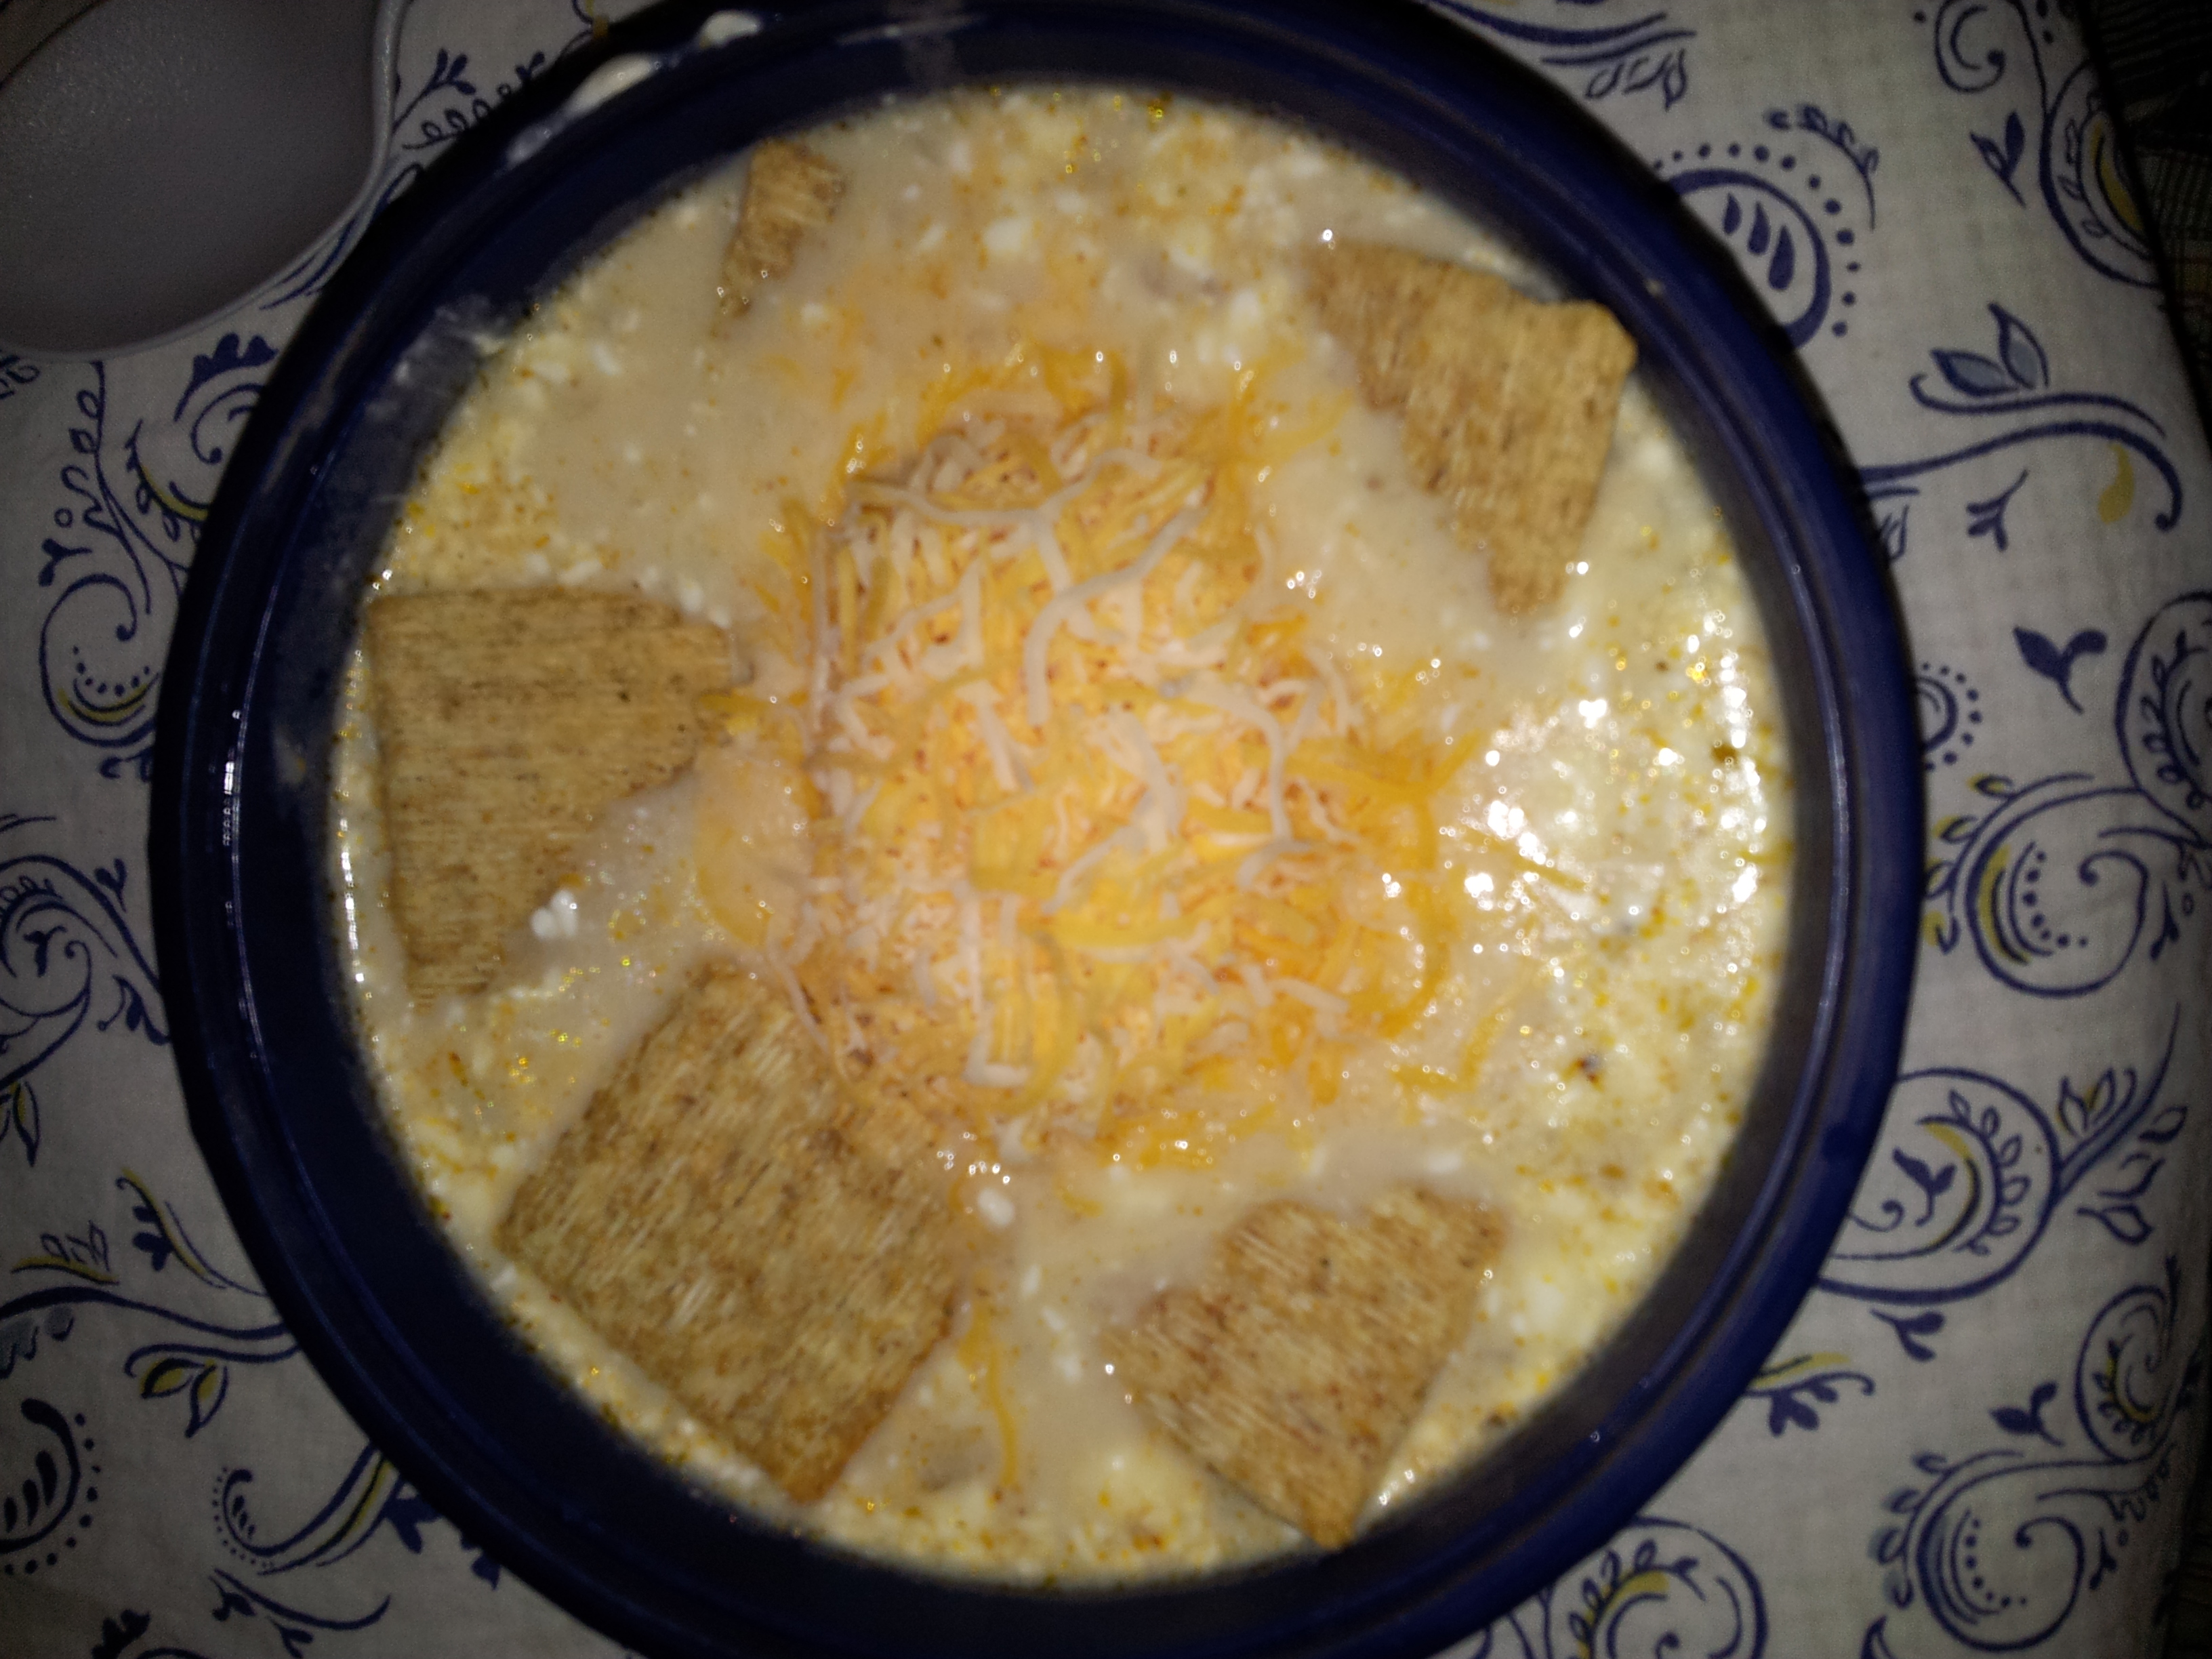 Cream Cheese Potato Soup "inspired by Panera's"